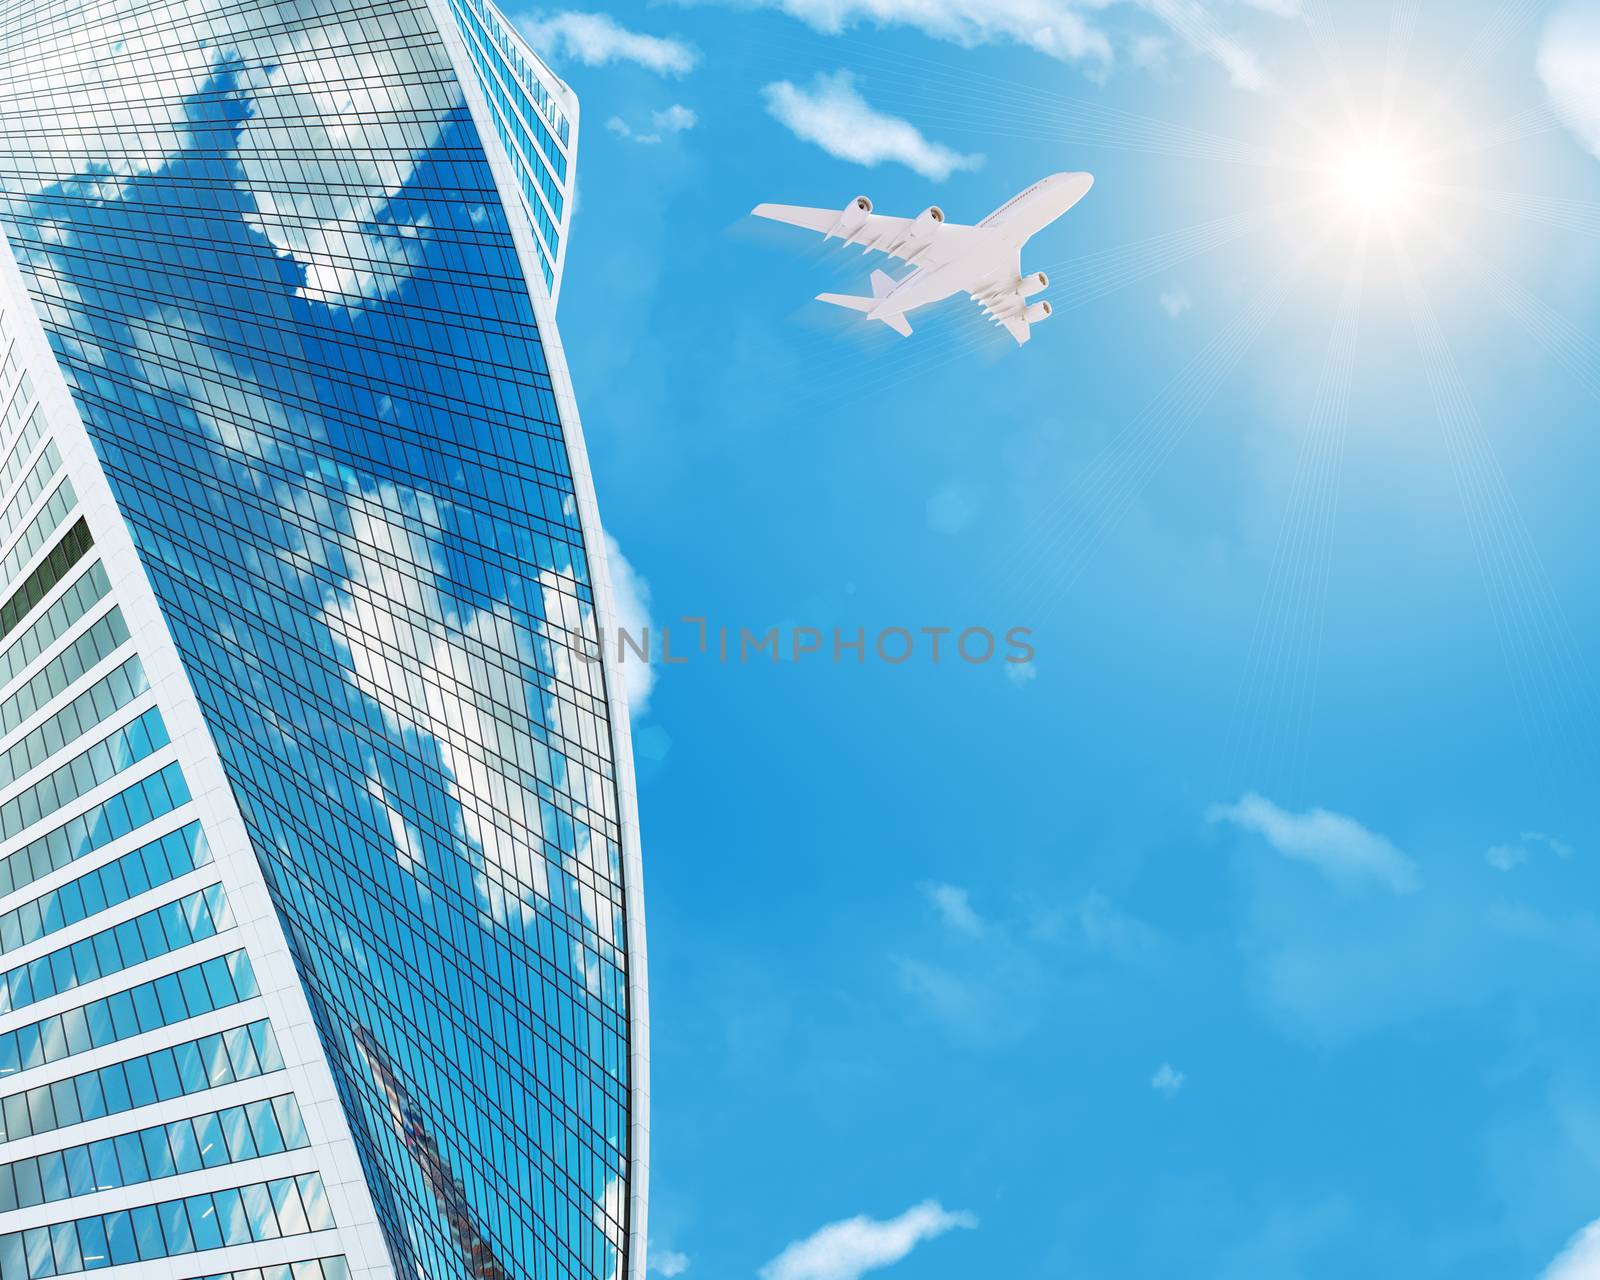 Skyscraper with jet by cherezoff